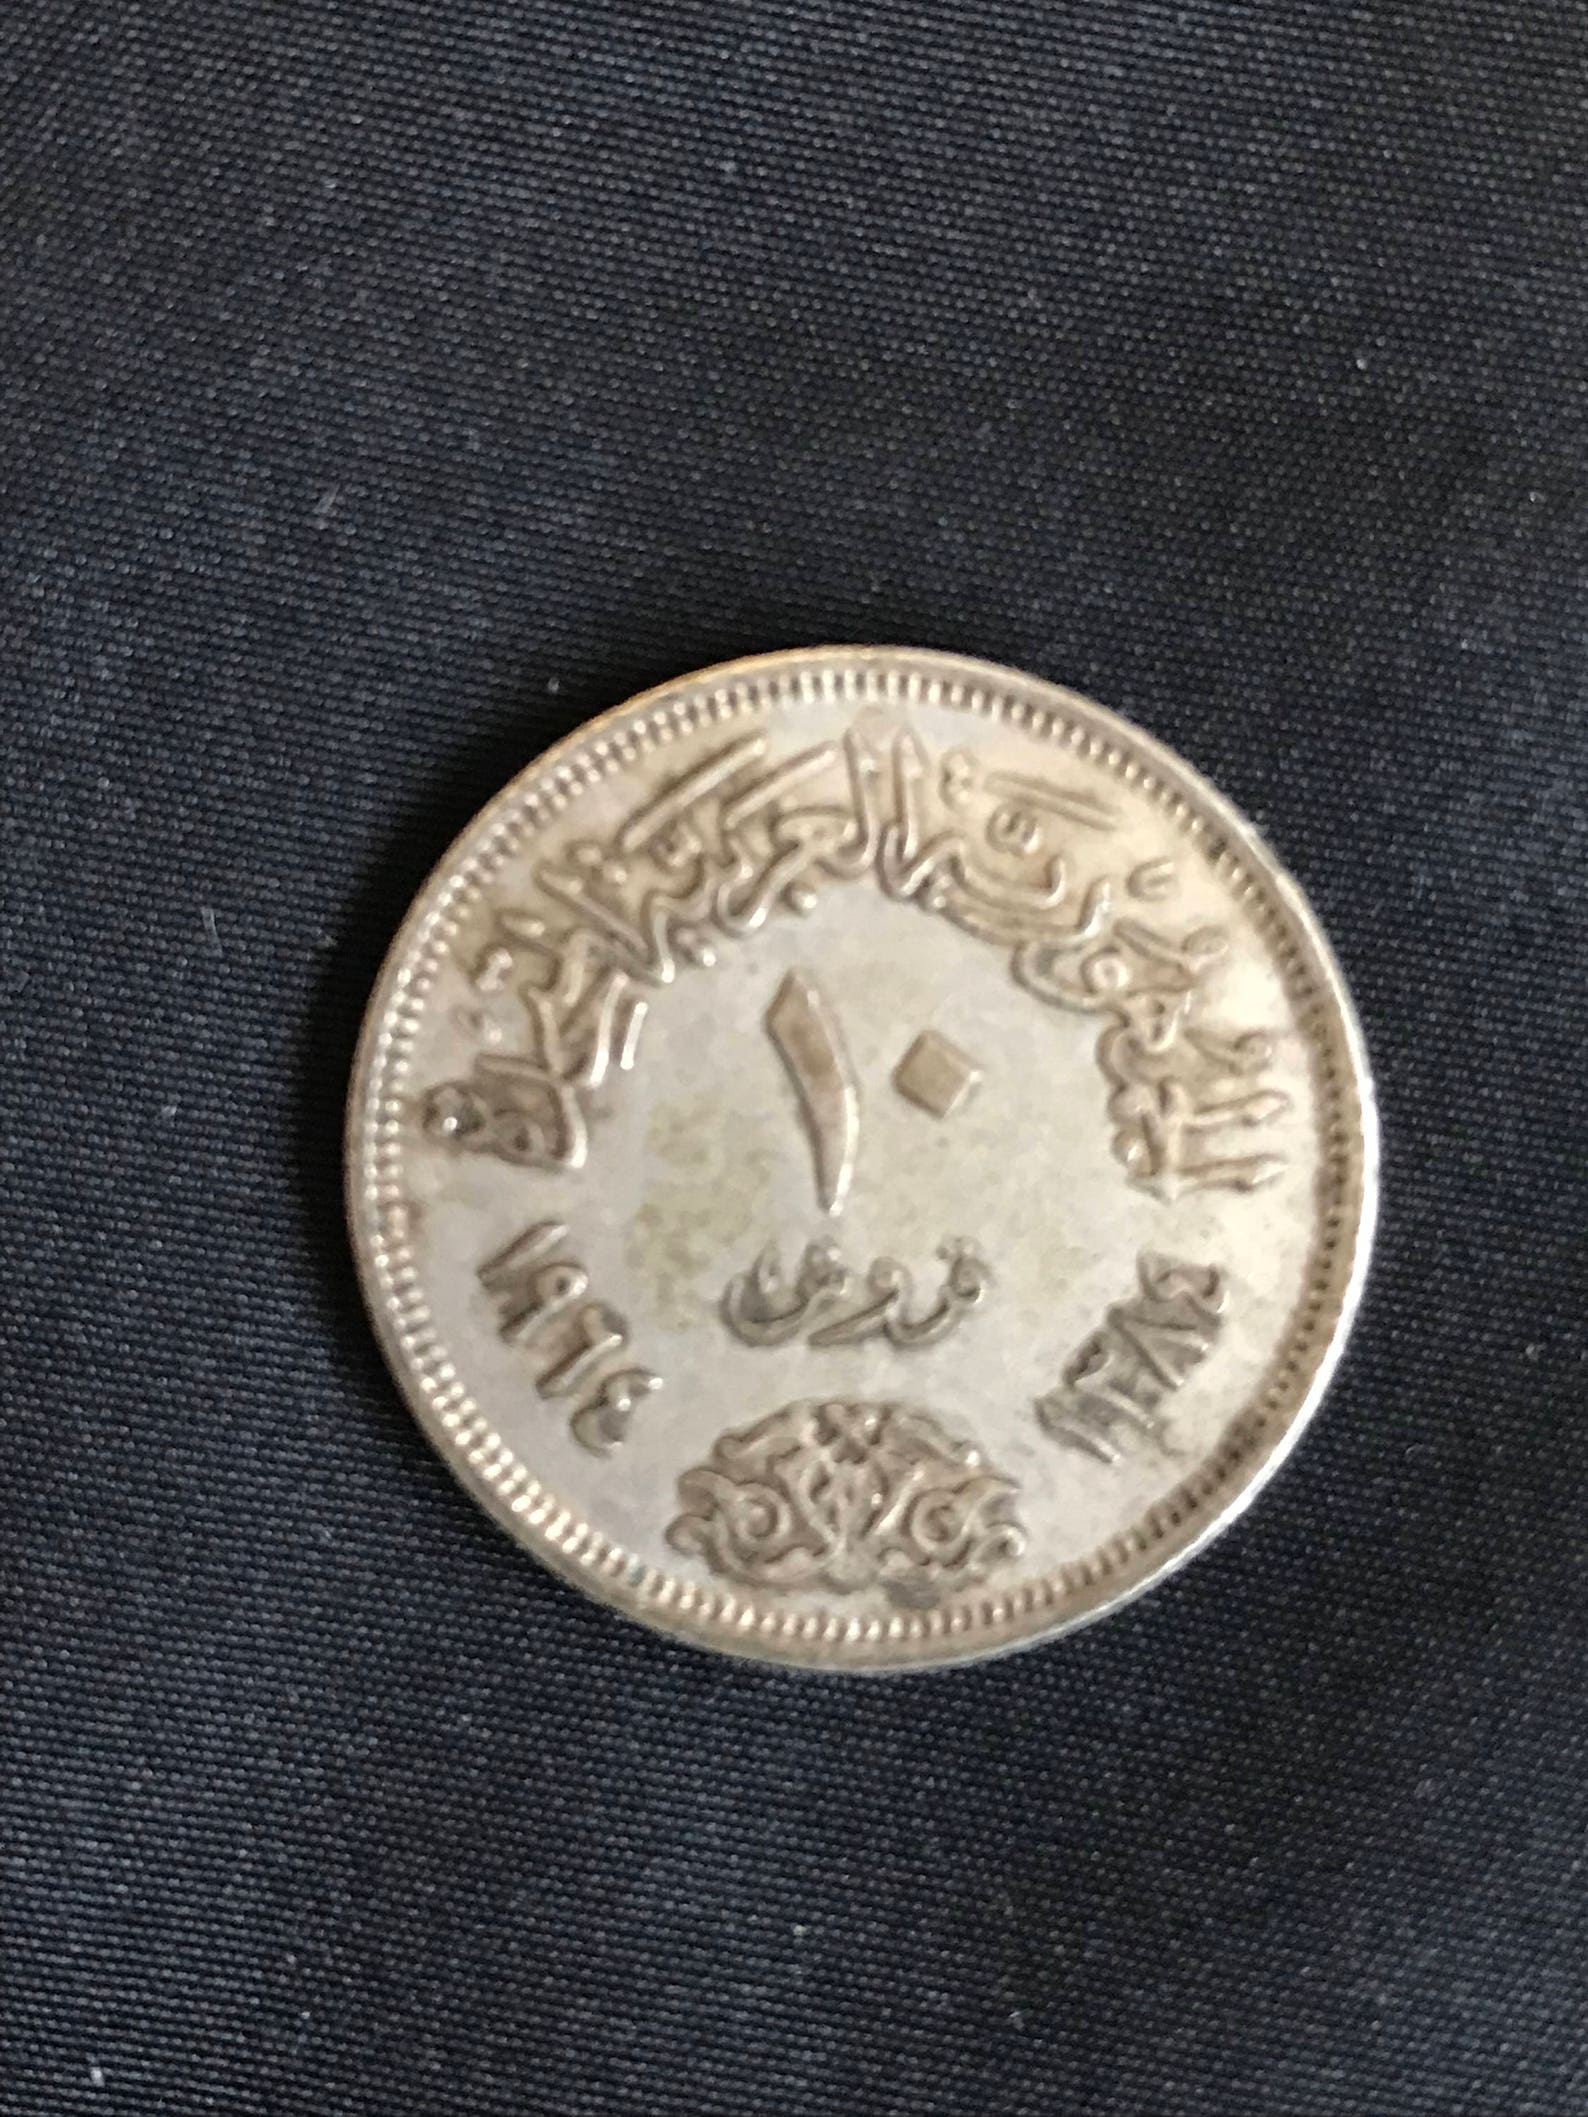 Egyptian 10 Piastre Coin - Etsy